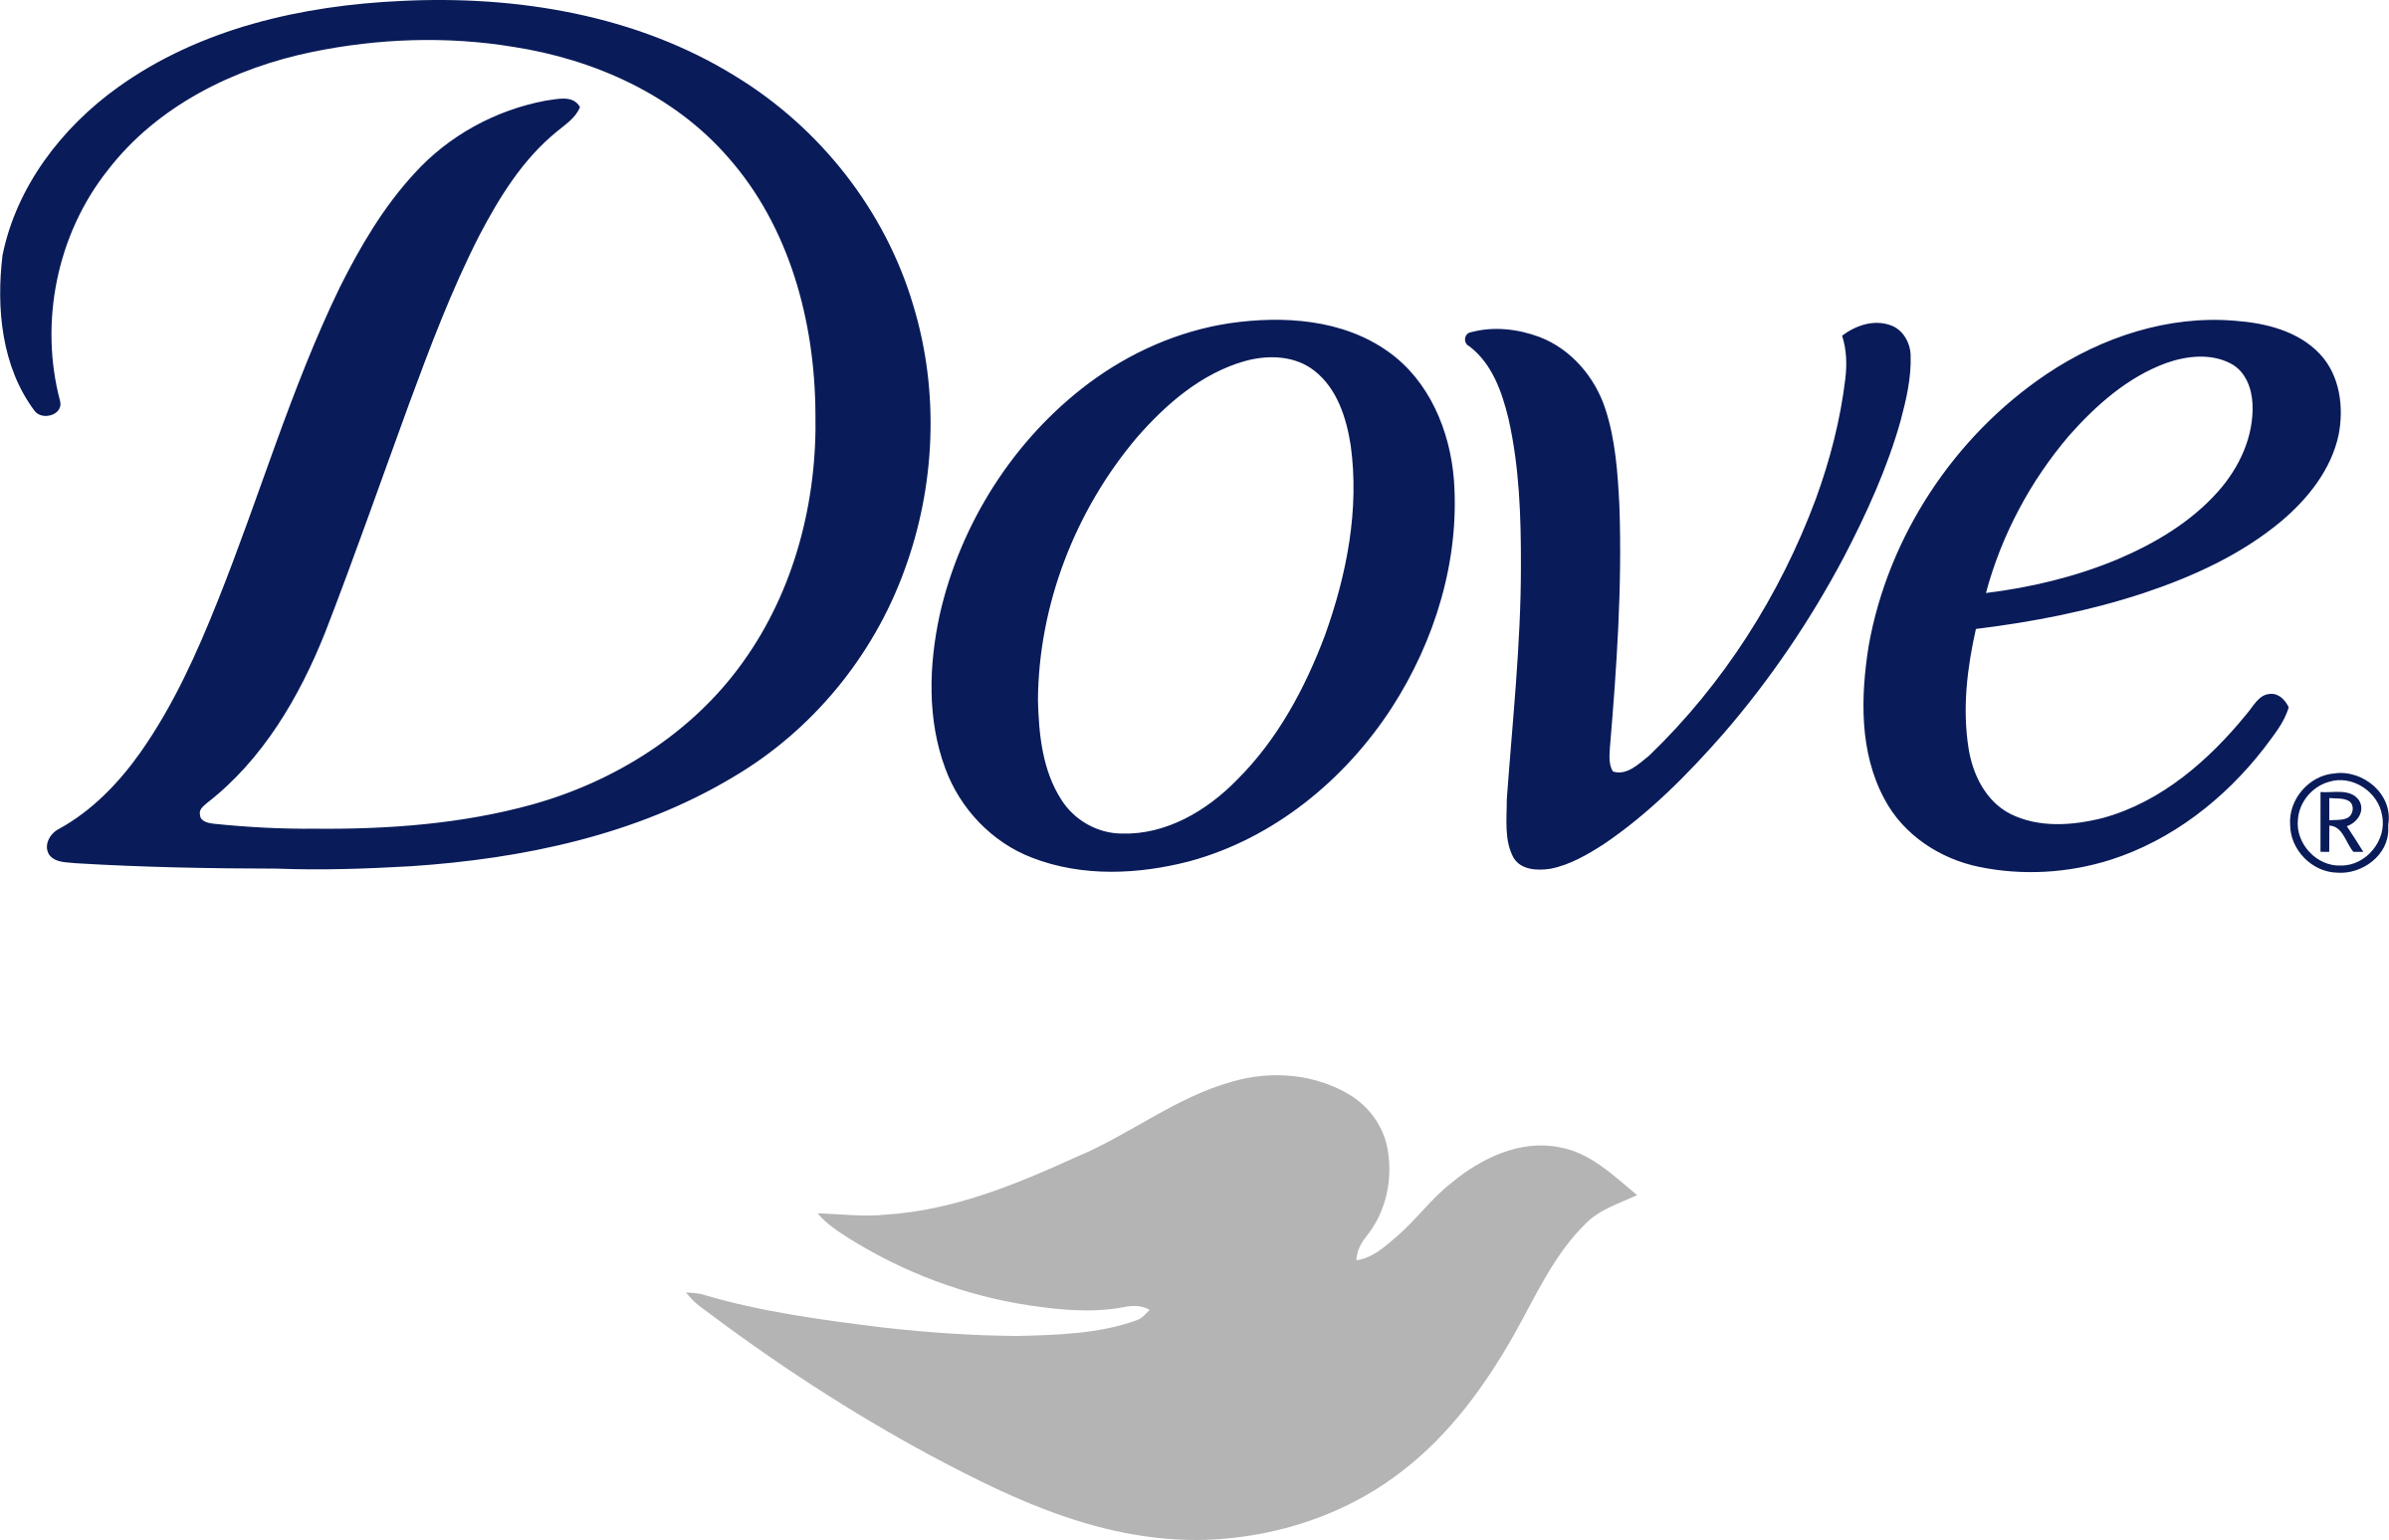 White Dove Logo - Dove Logo PNG Transparent & SVG Vector - Freebie Supply